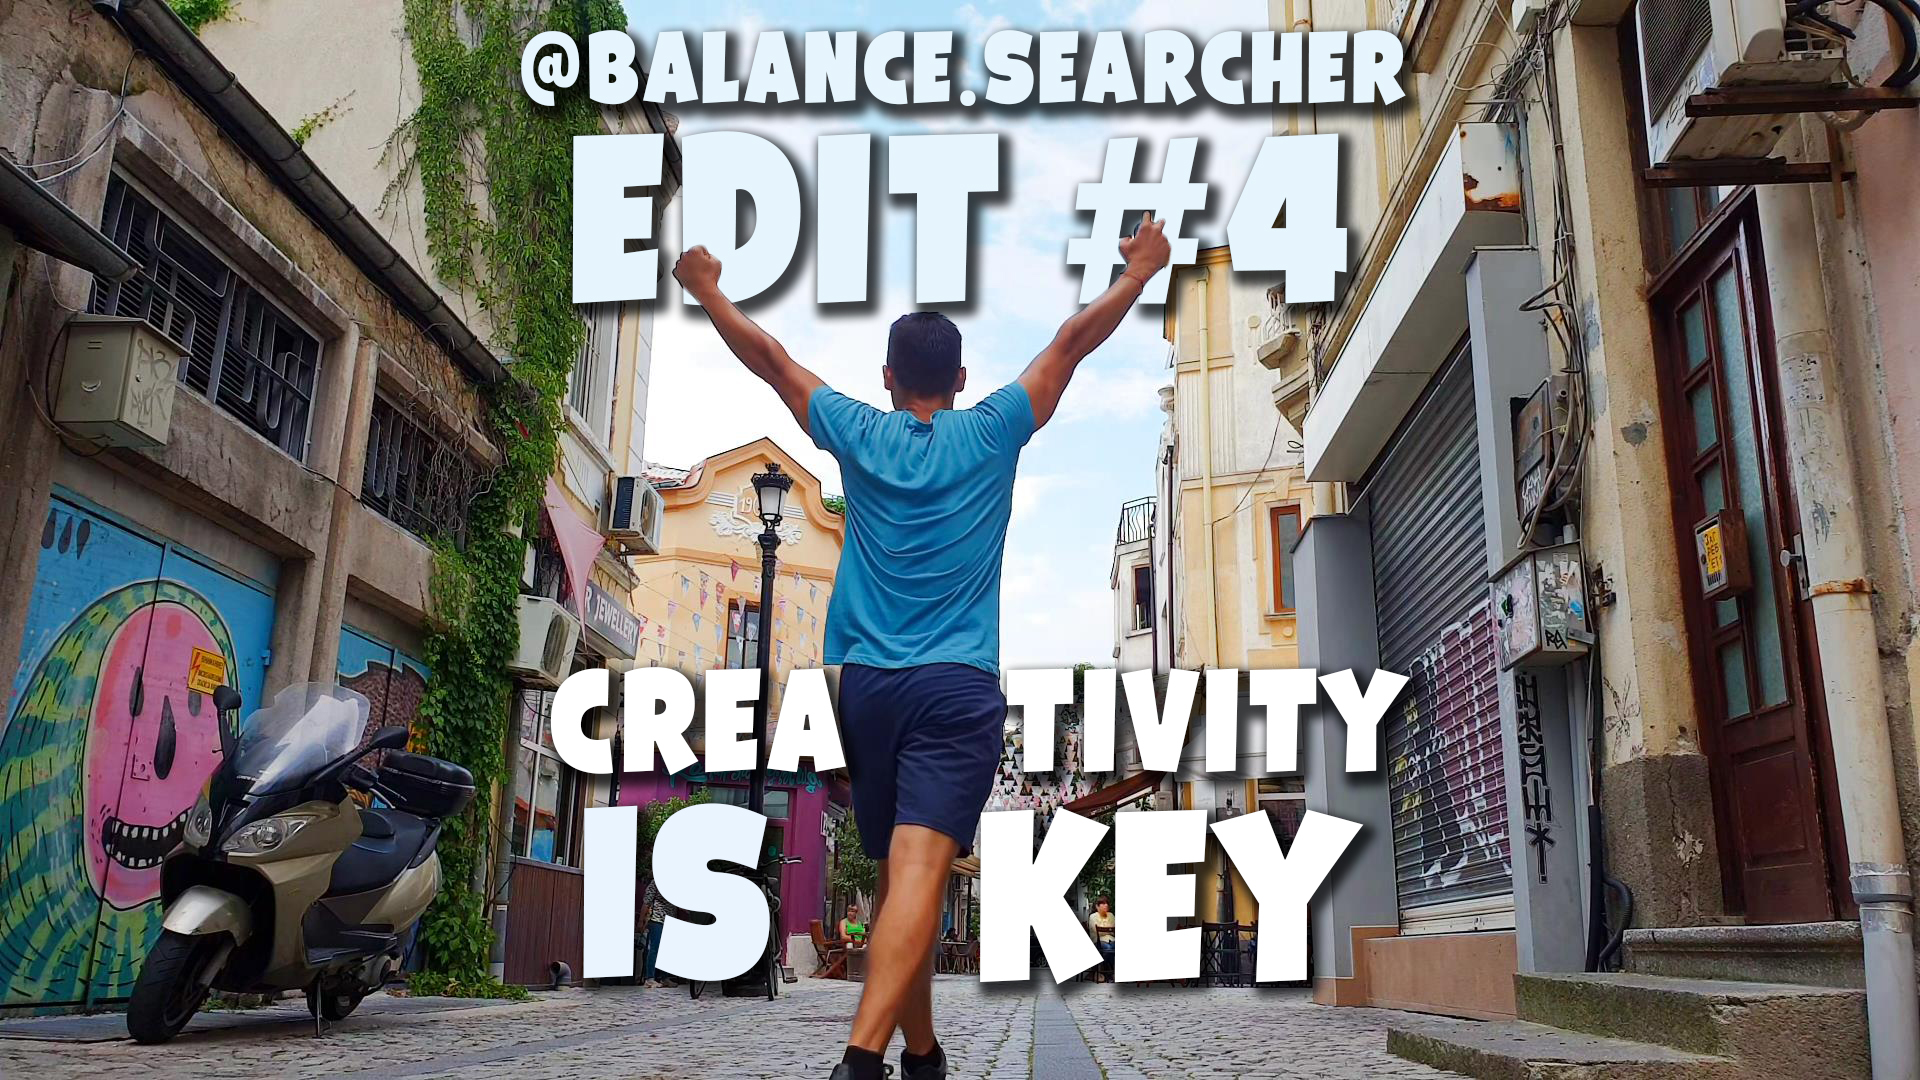 @Balance.Searcher Edit #4 CREATIVITY IS KEY